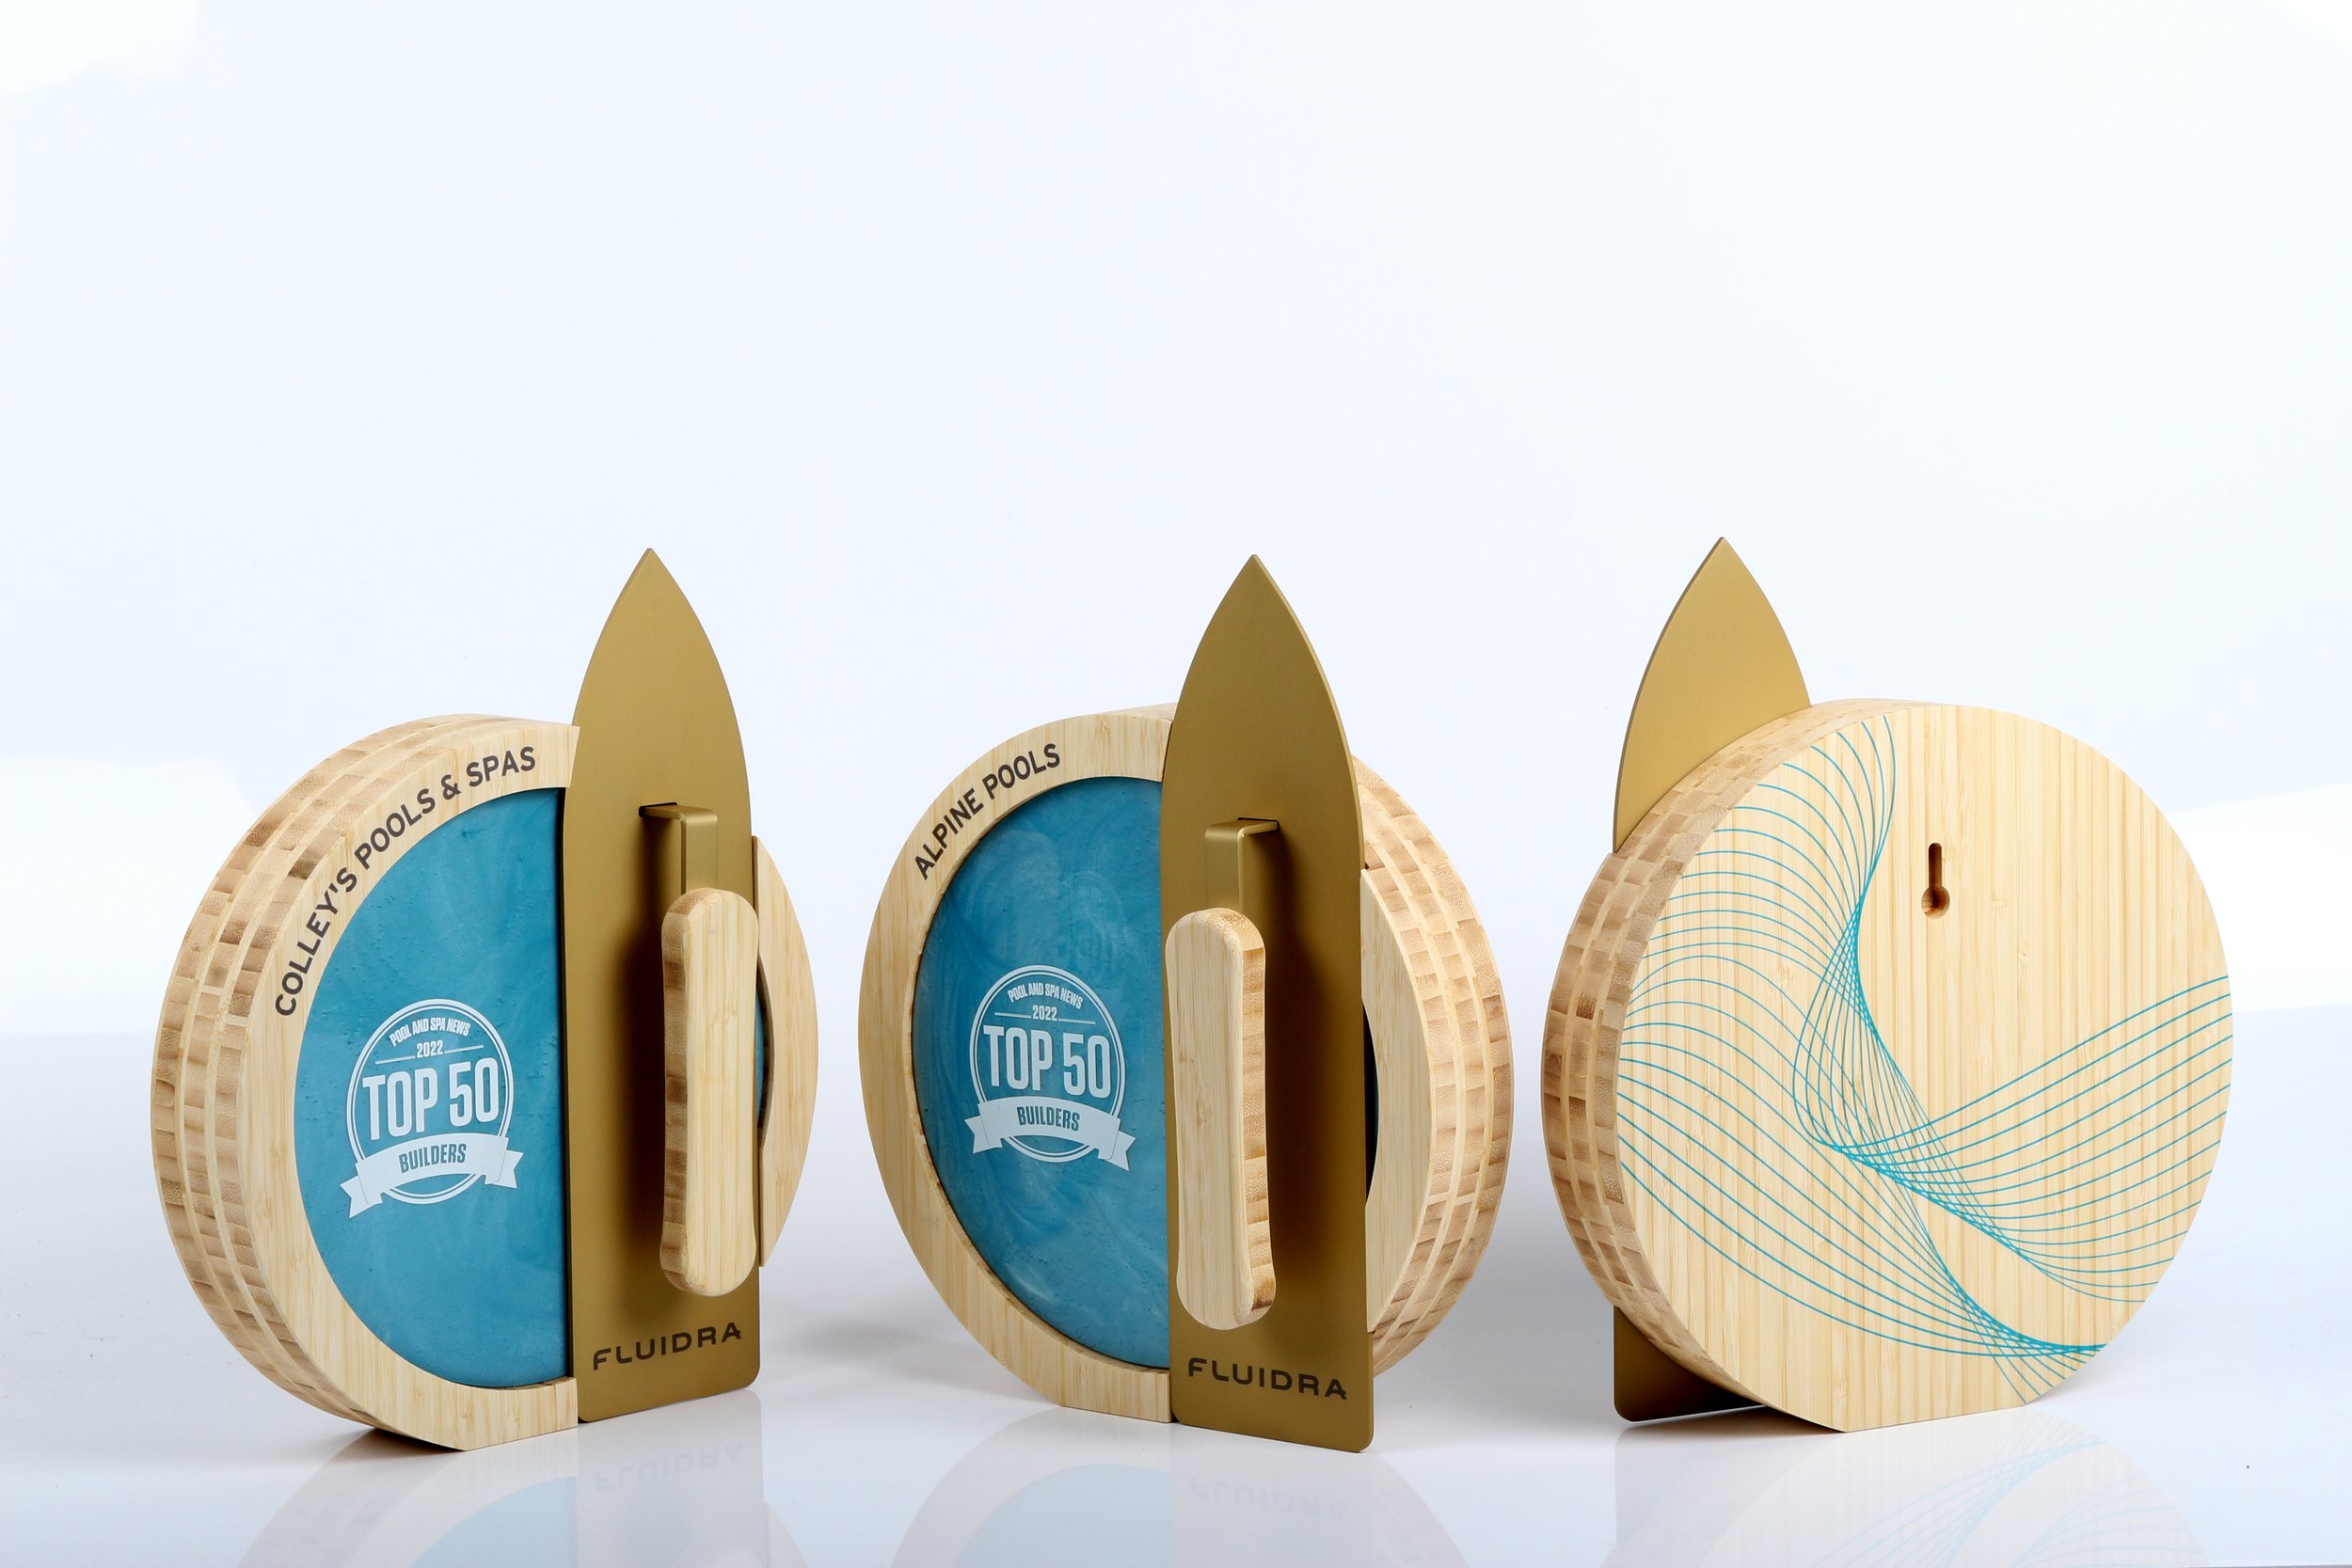 Corporate branded unique awards for Fluidra